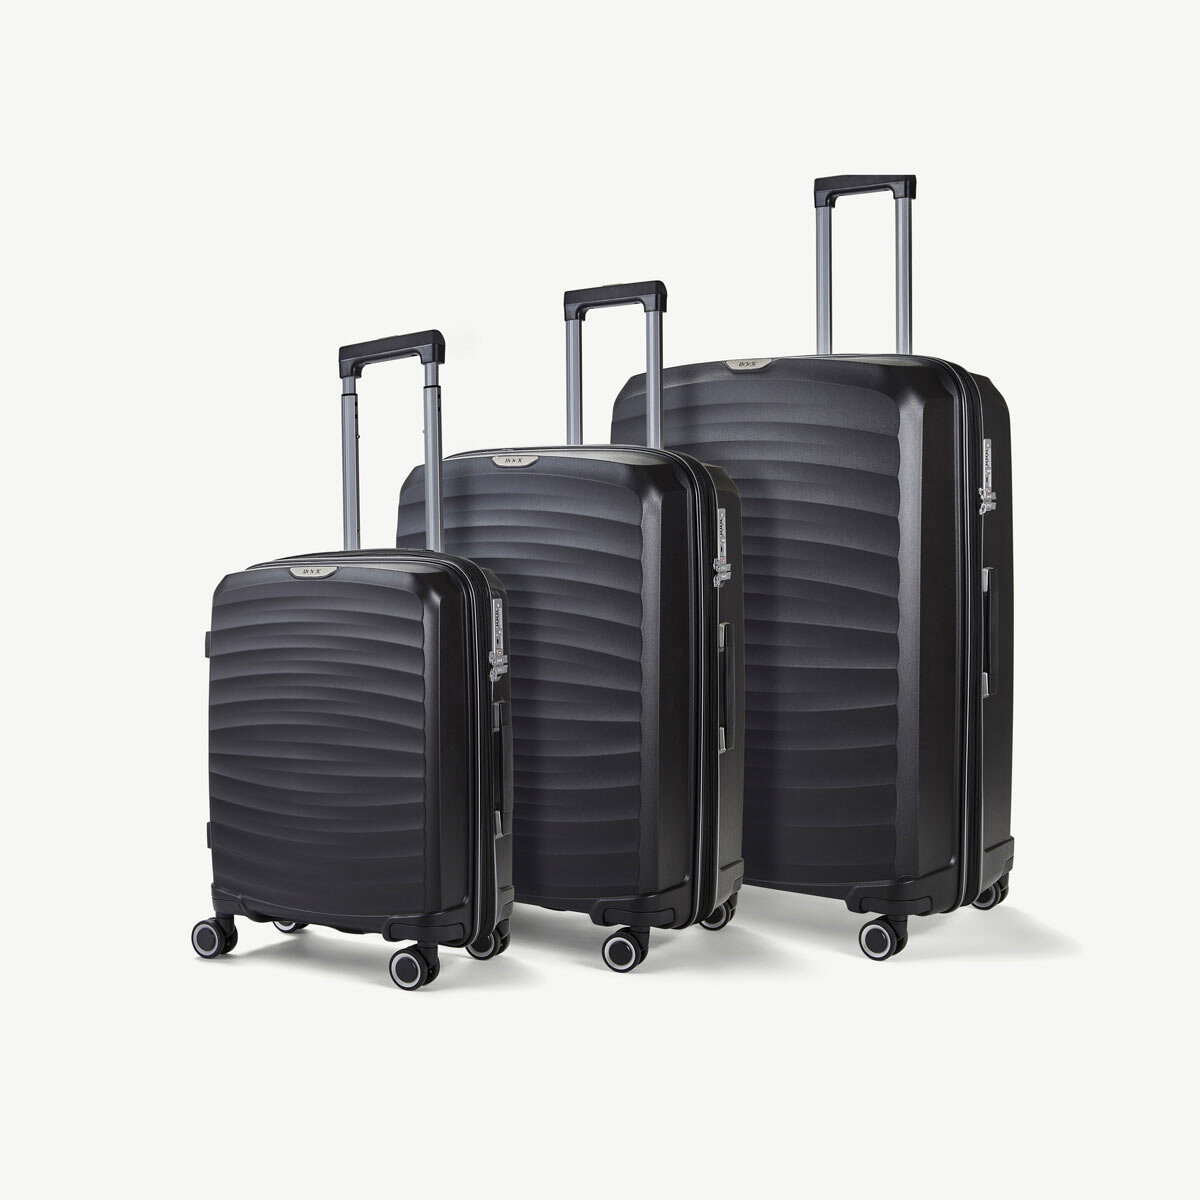 Rock Sunwave 3 Piece Hardside Luggage Set in 3 Colours